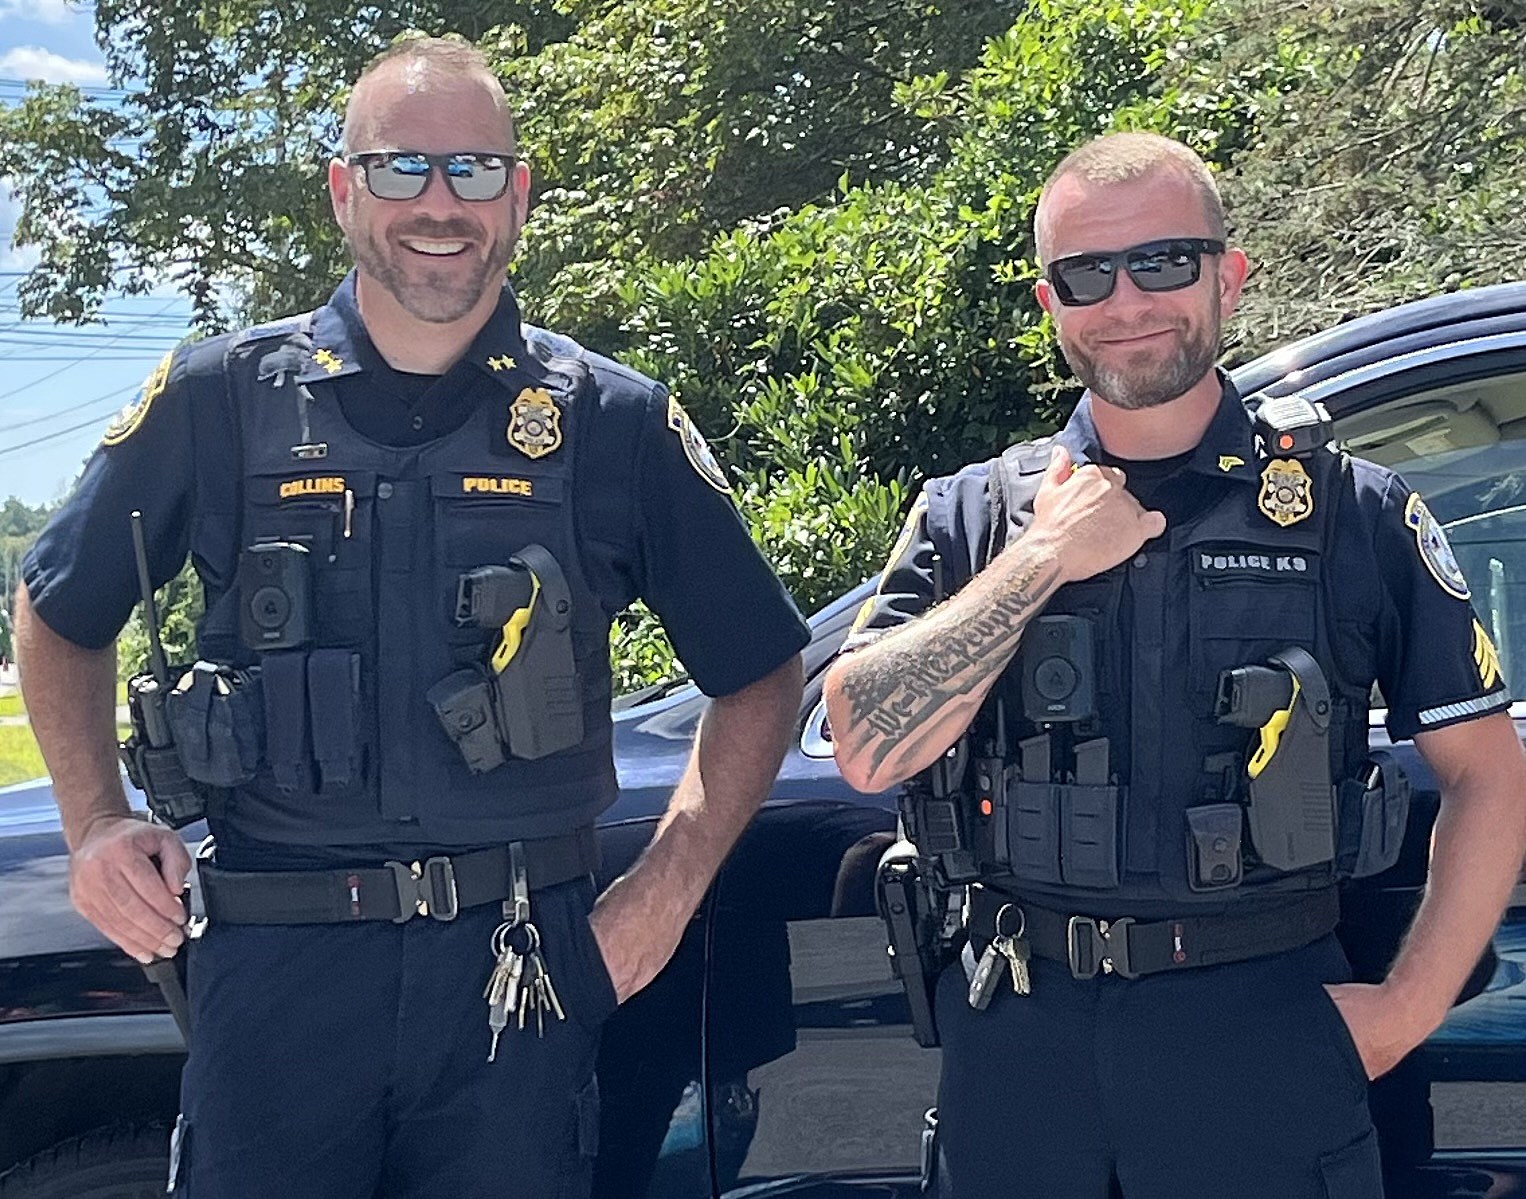 insane hot!  Men in uniform, Hot cops, Texas police